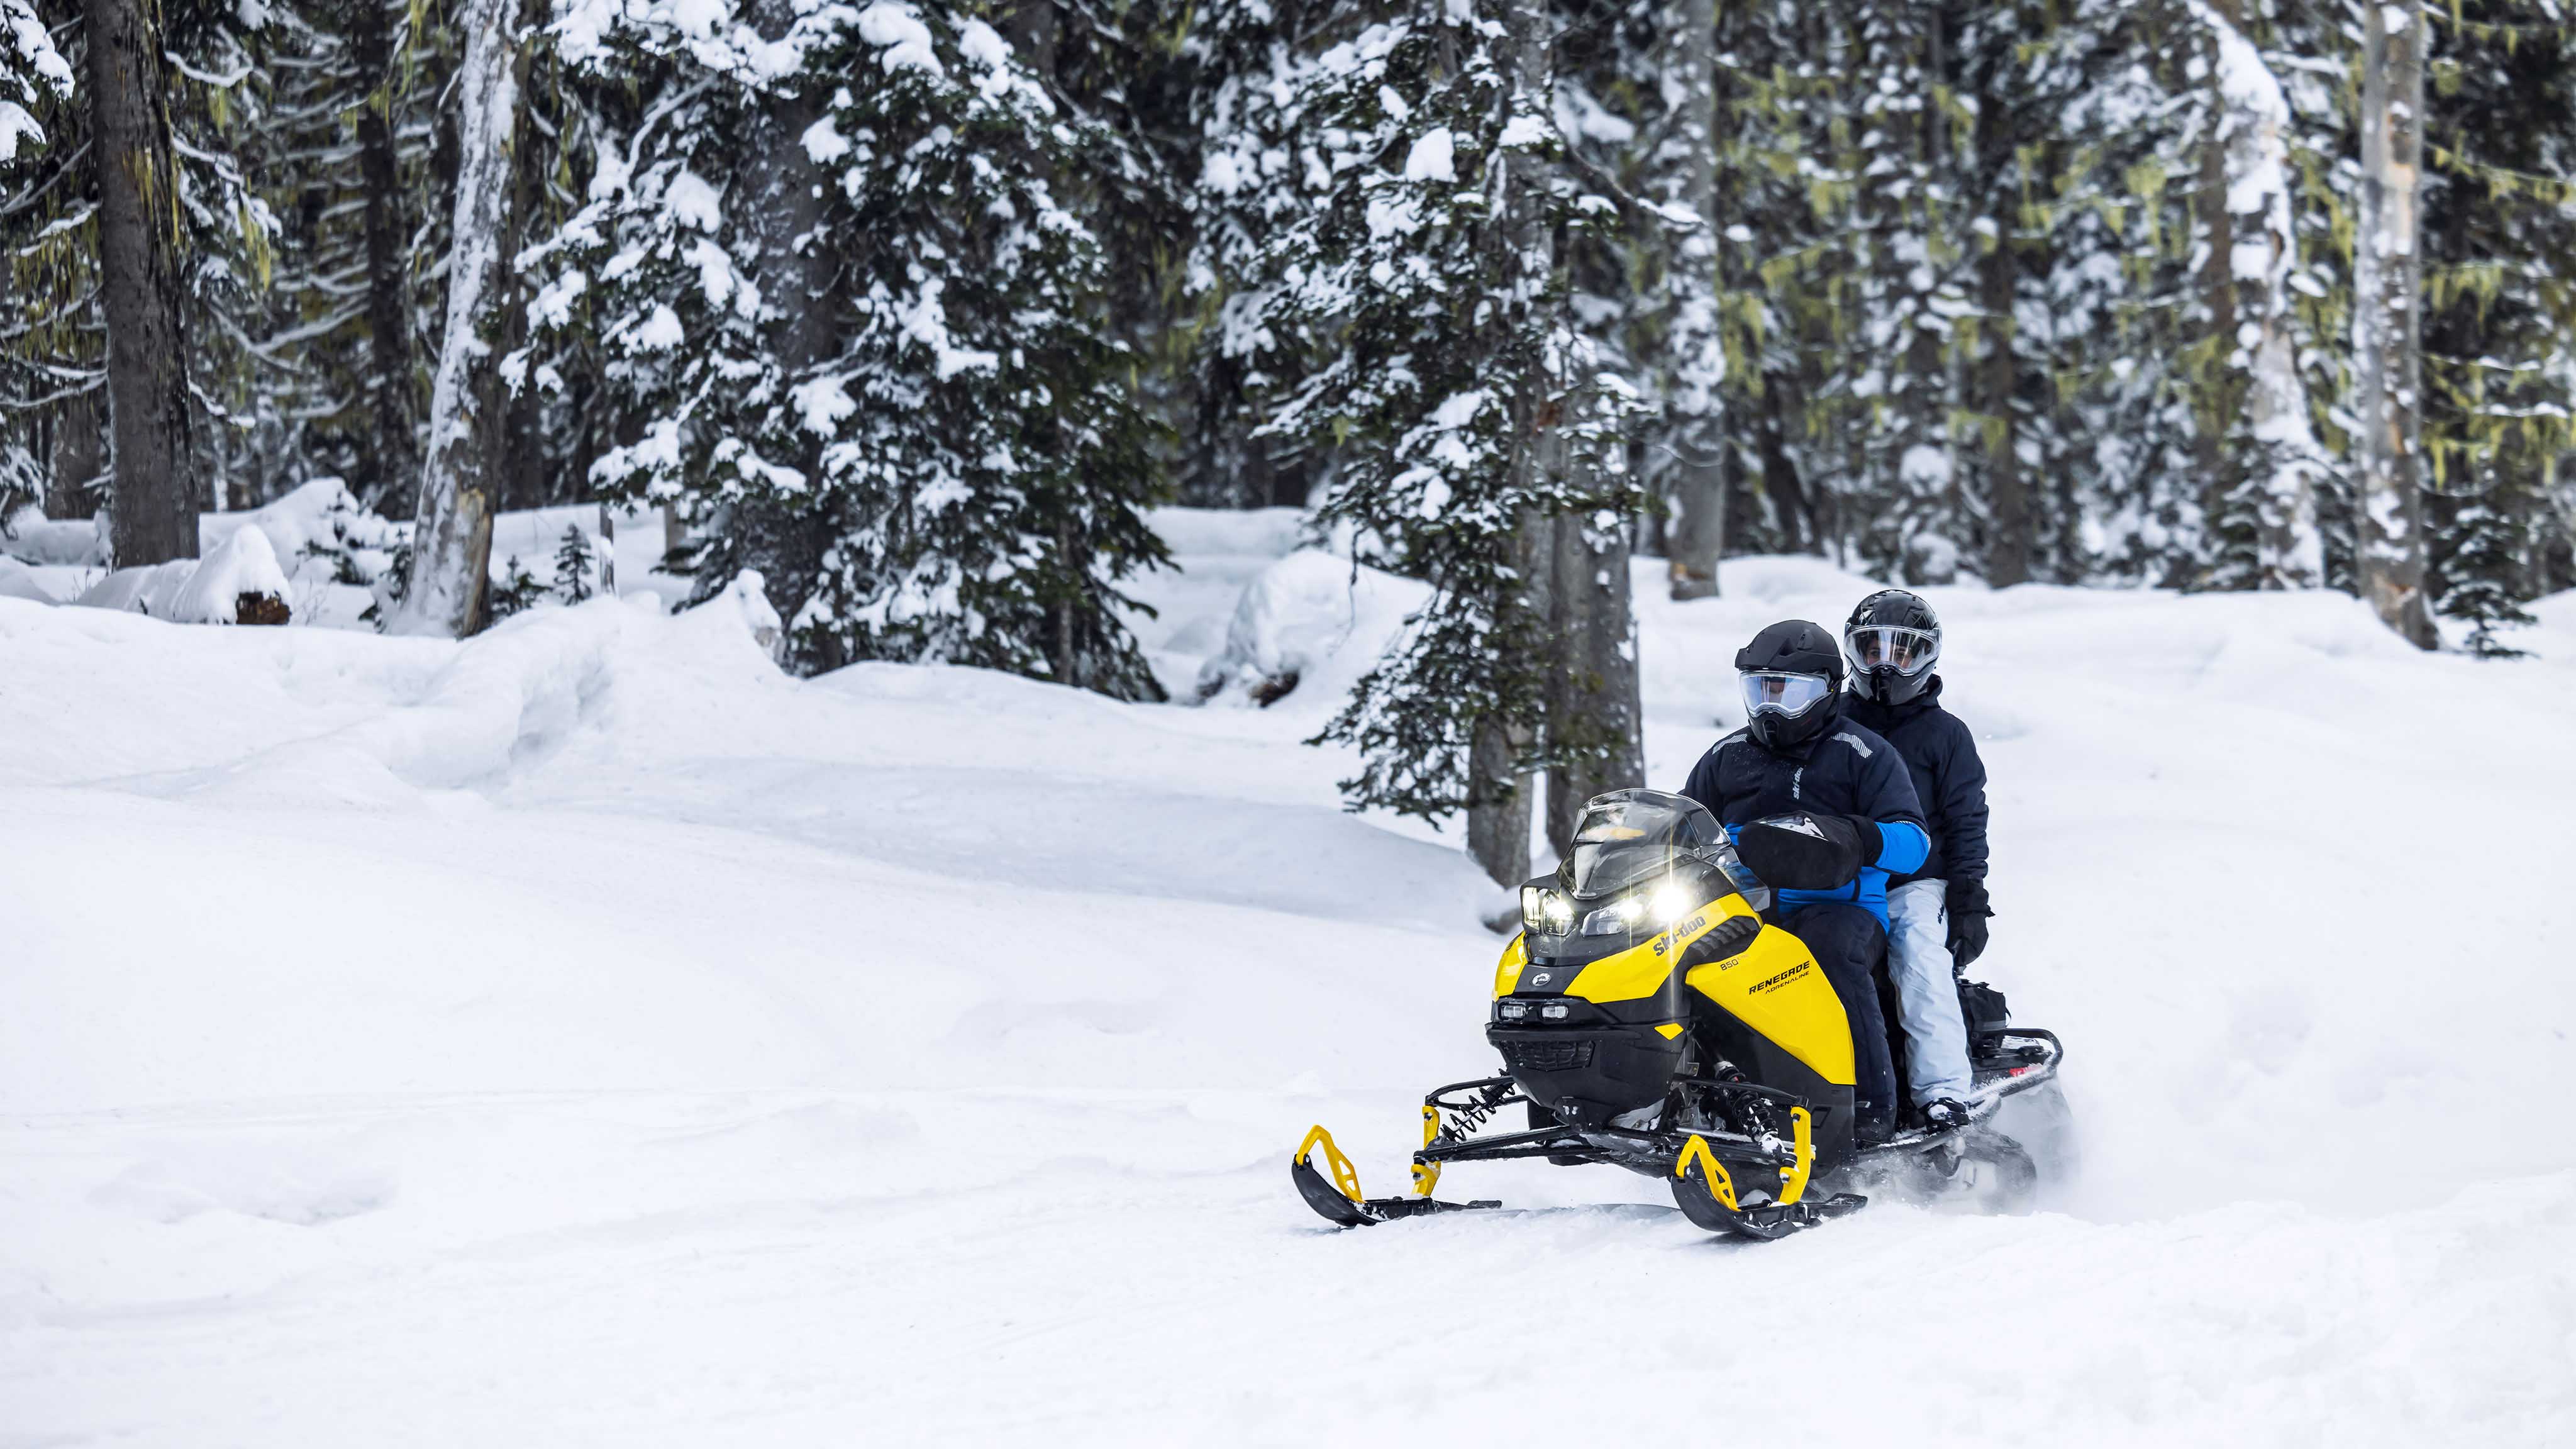 Couple riding the new SKi-Doo Trail snowmobile